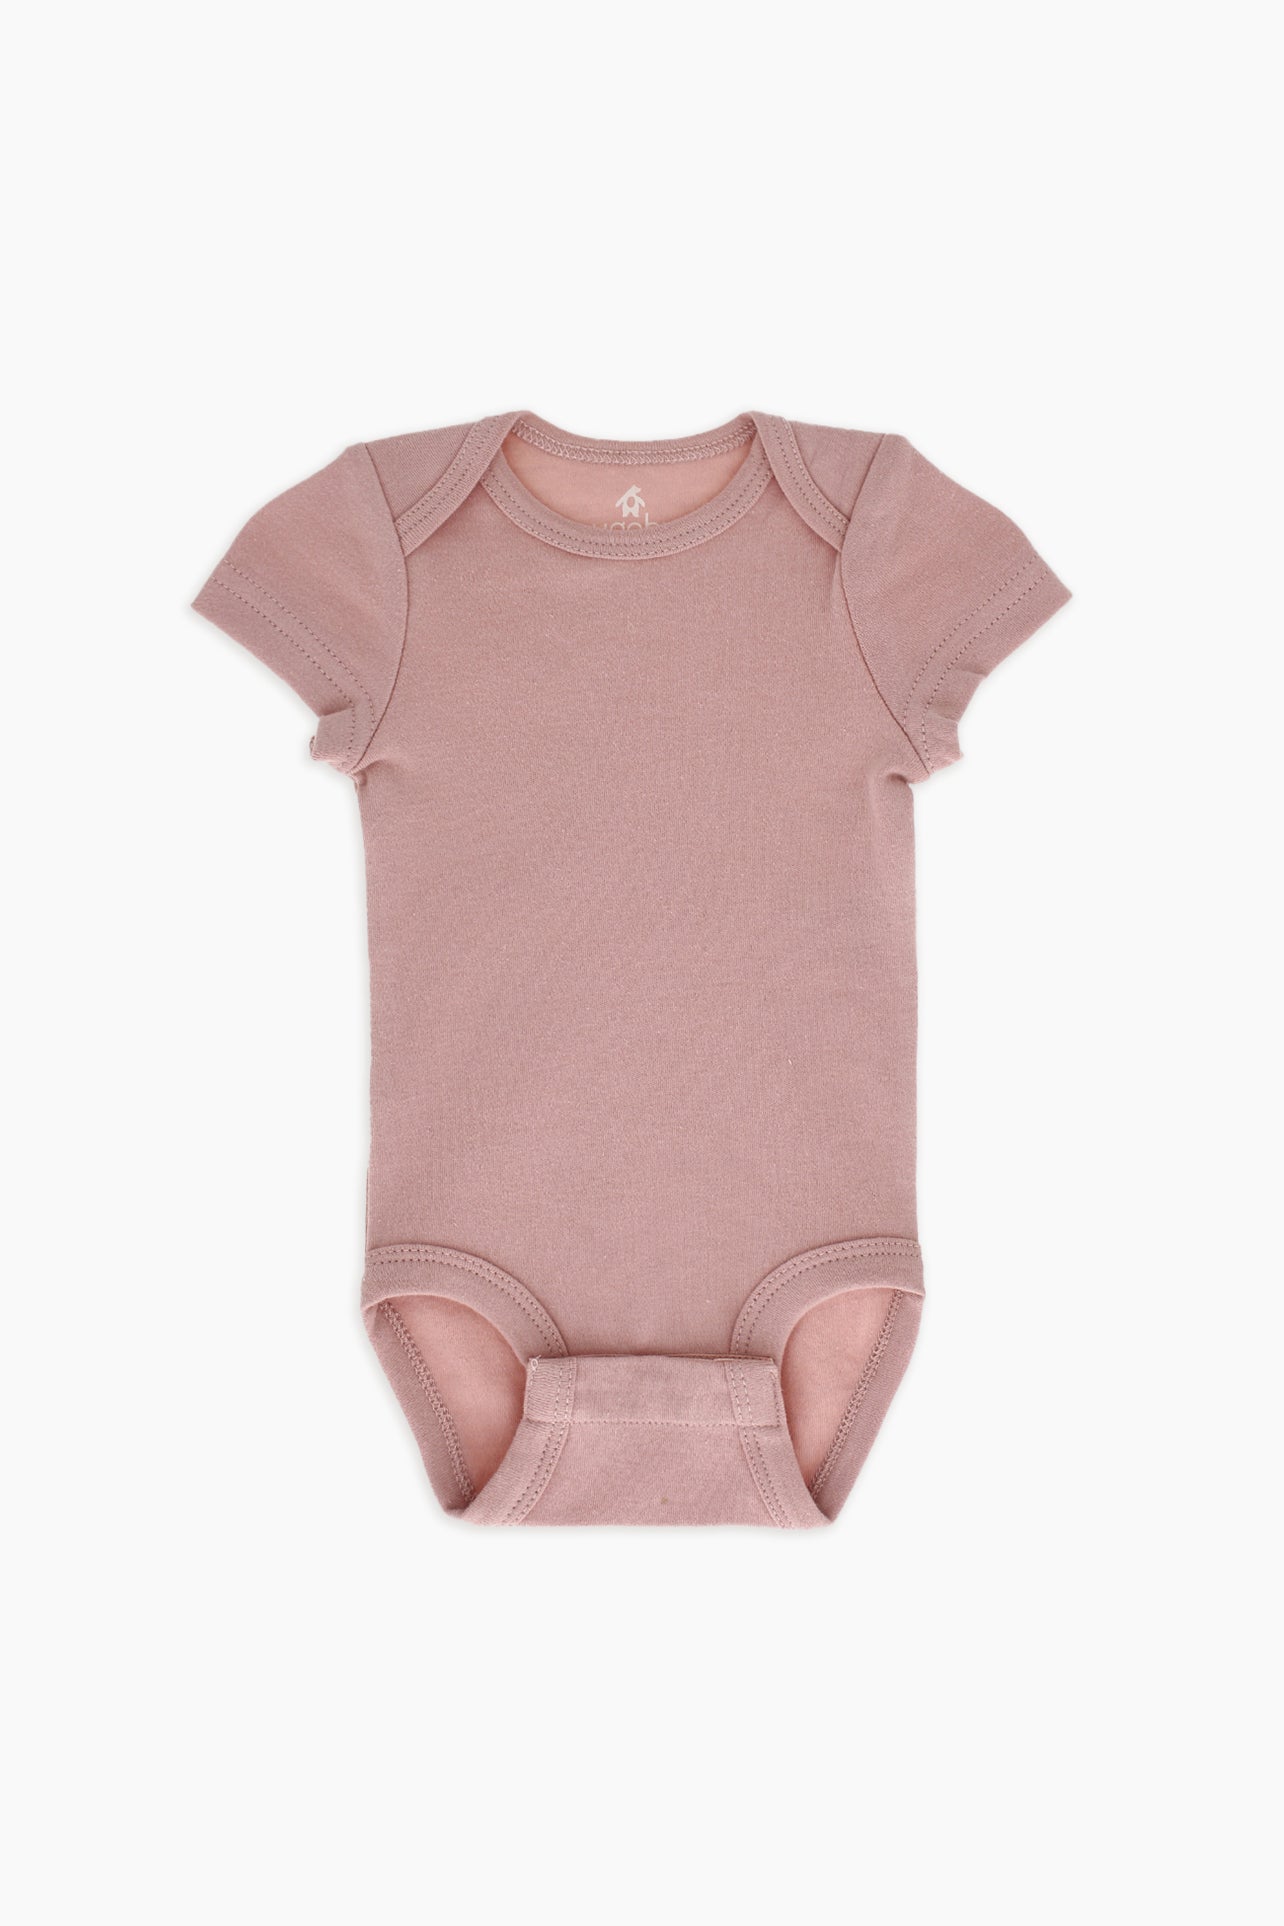 Snugabye Organic Cotton Baby Bodysuit - Misty Rose